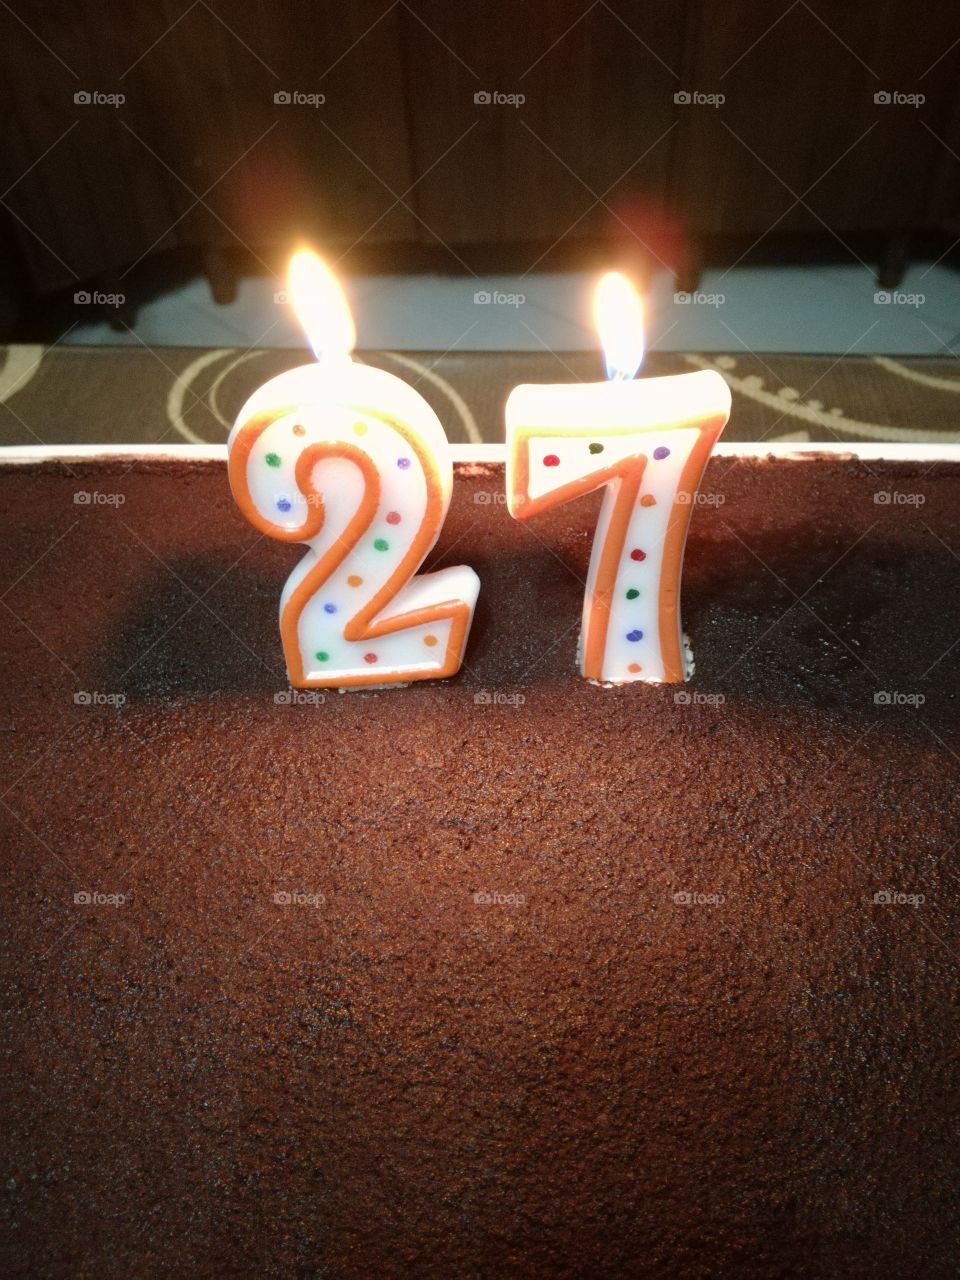 Birthday
27
27th
Cake 
Chocolate
coffee
light
candles